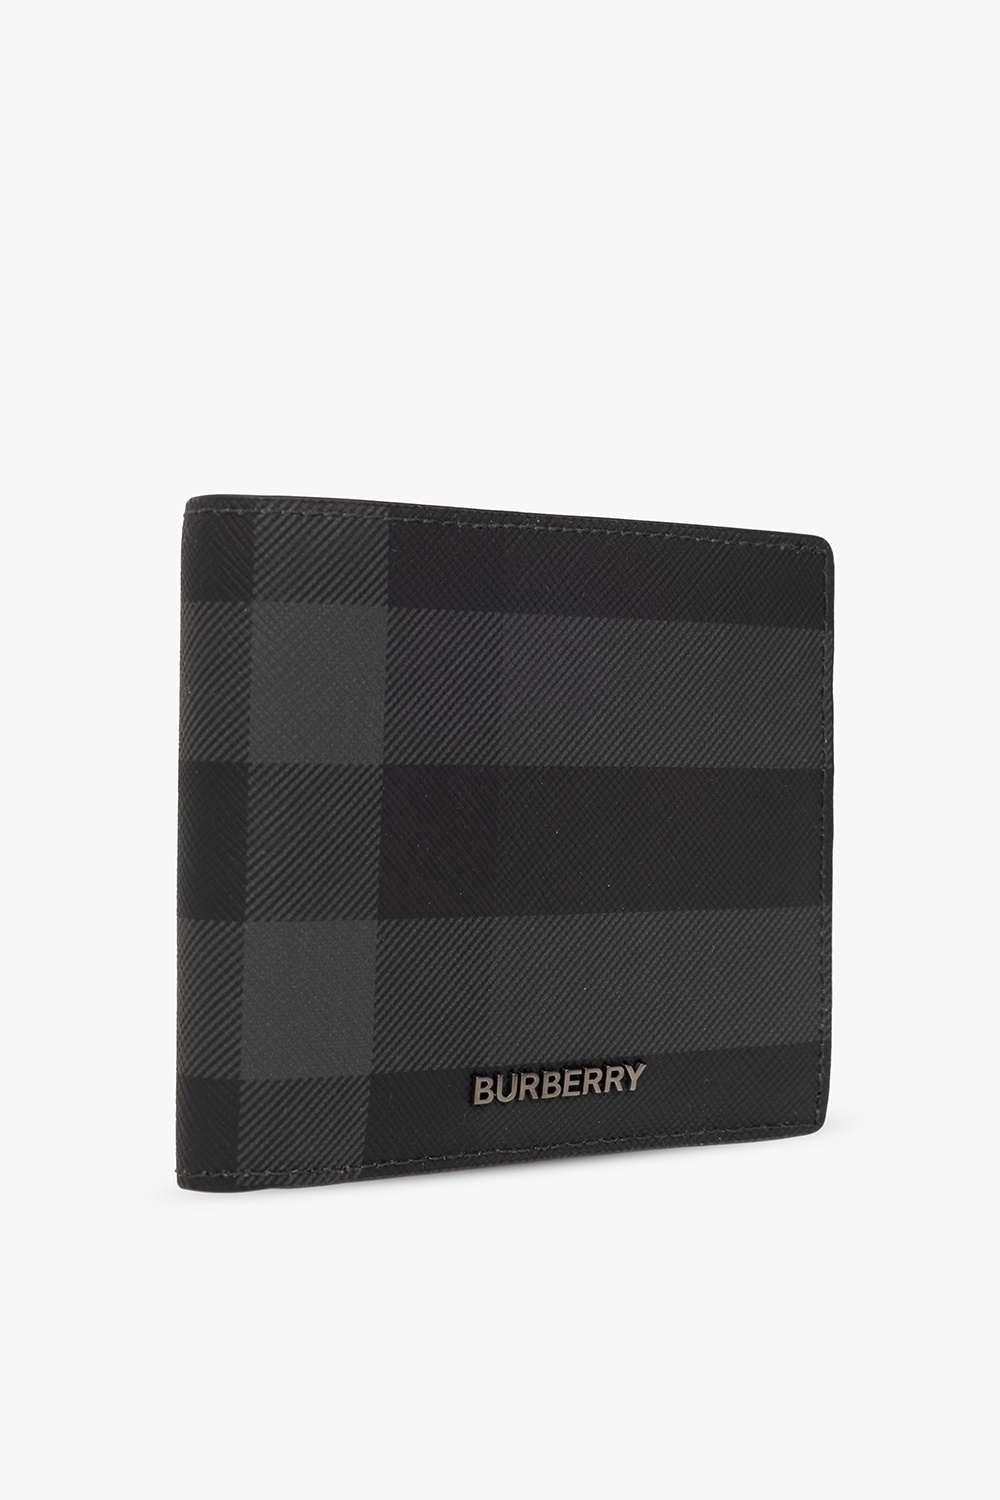 burberry Gabardine Wallet with logo